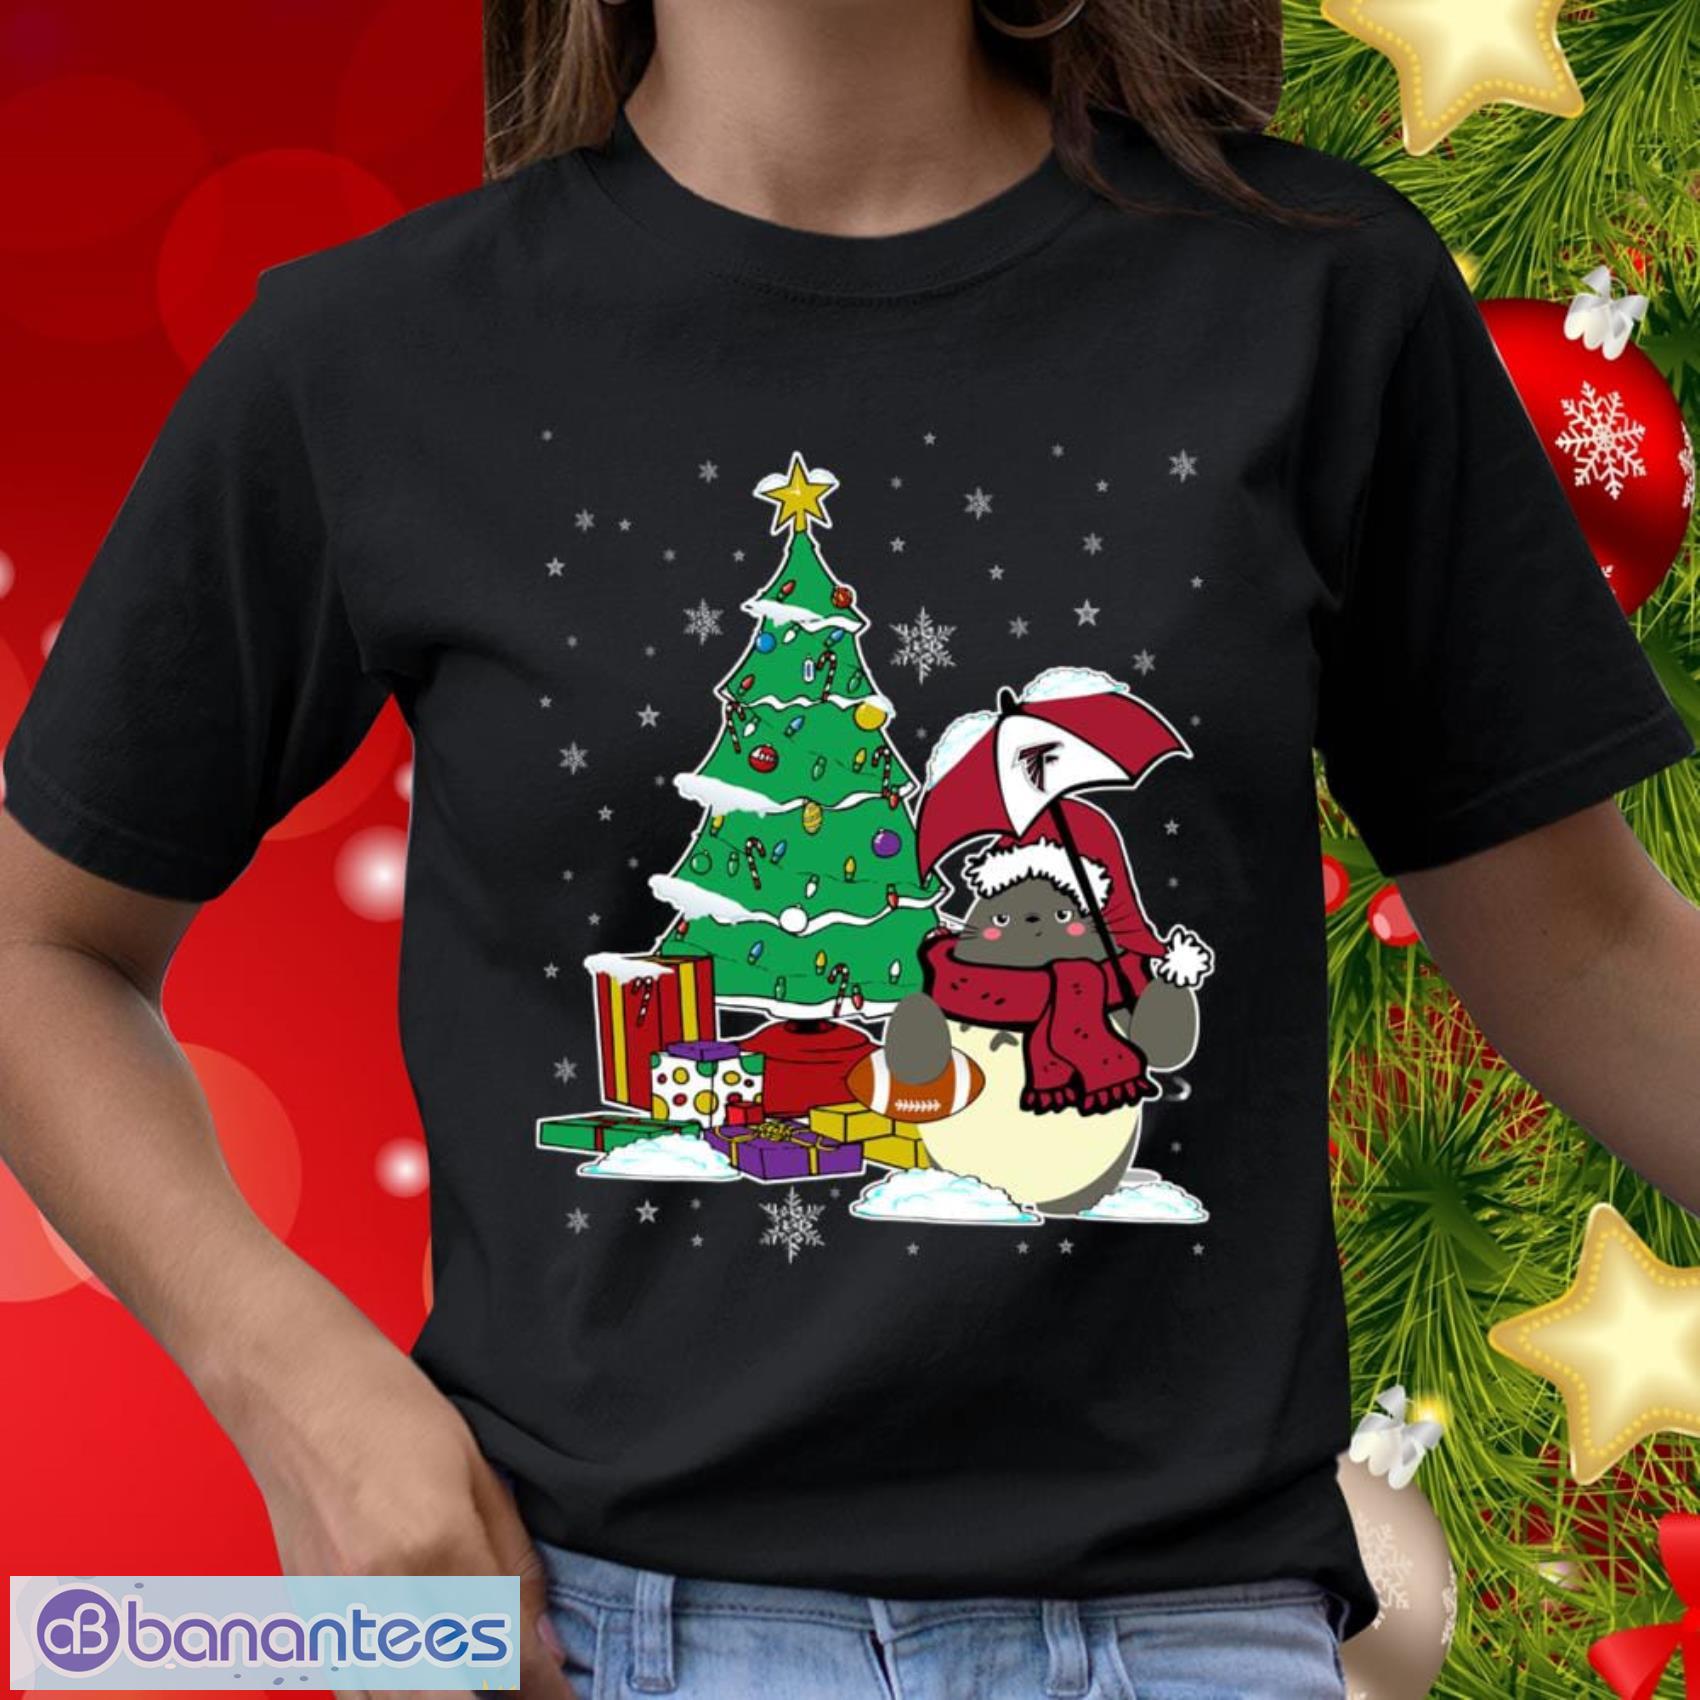 Atlanta Falcons NFL Football Gift Fr Fans Cute Tonari No Totoro Christmas Sports T Shirt - Atlanta Falcons NFL Football Cute Tonari No Totoro Christmas Sports T Shirt_2